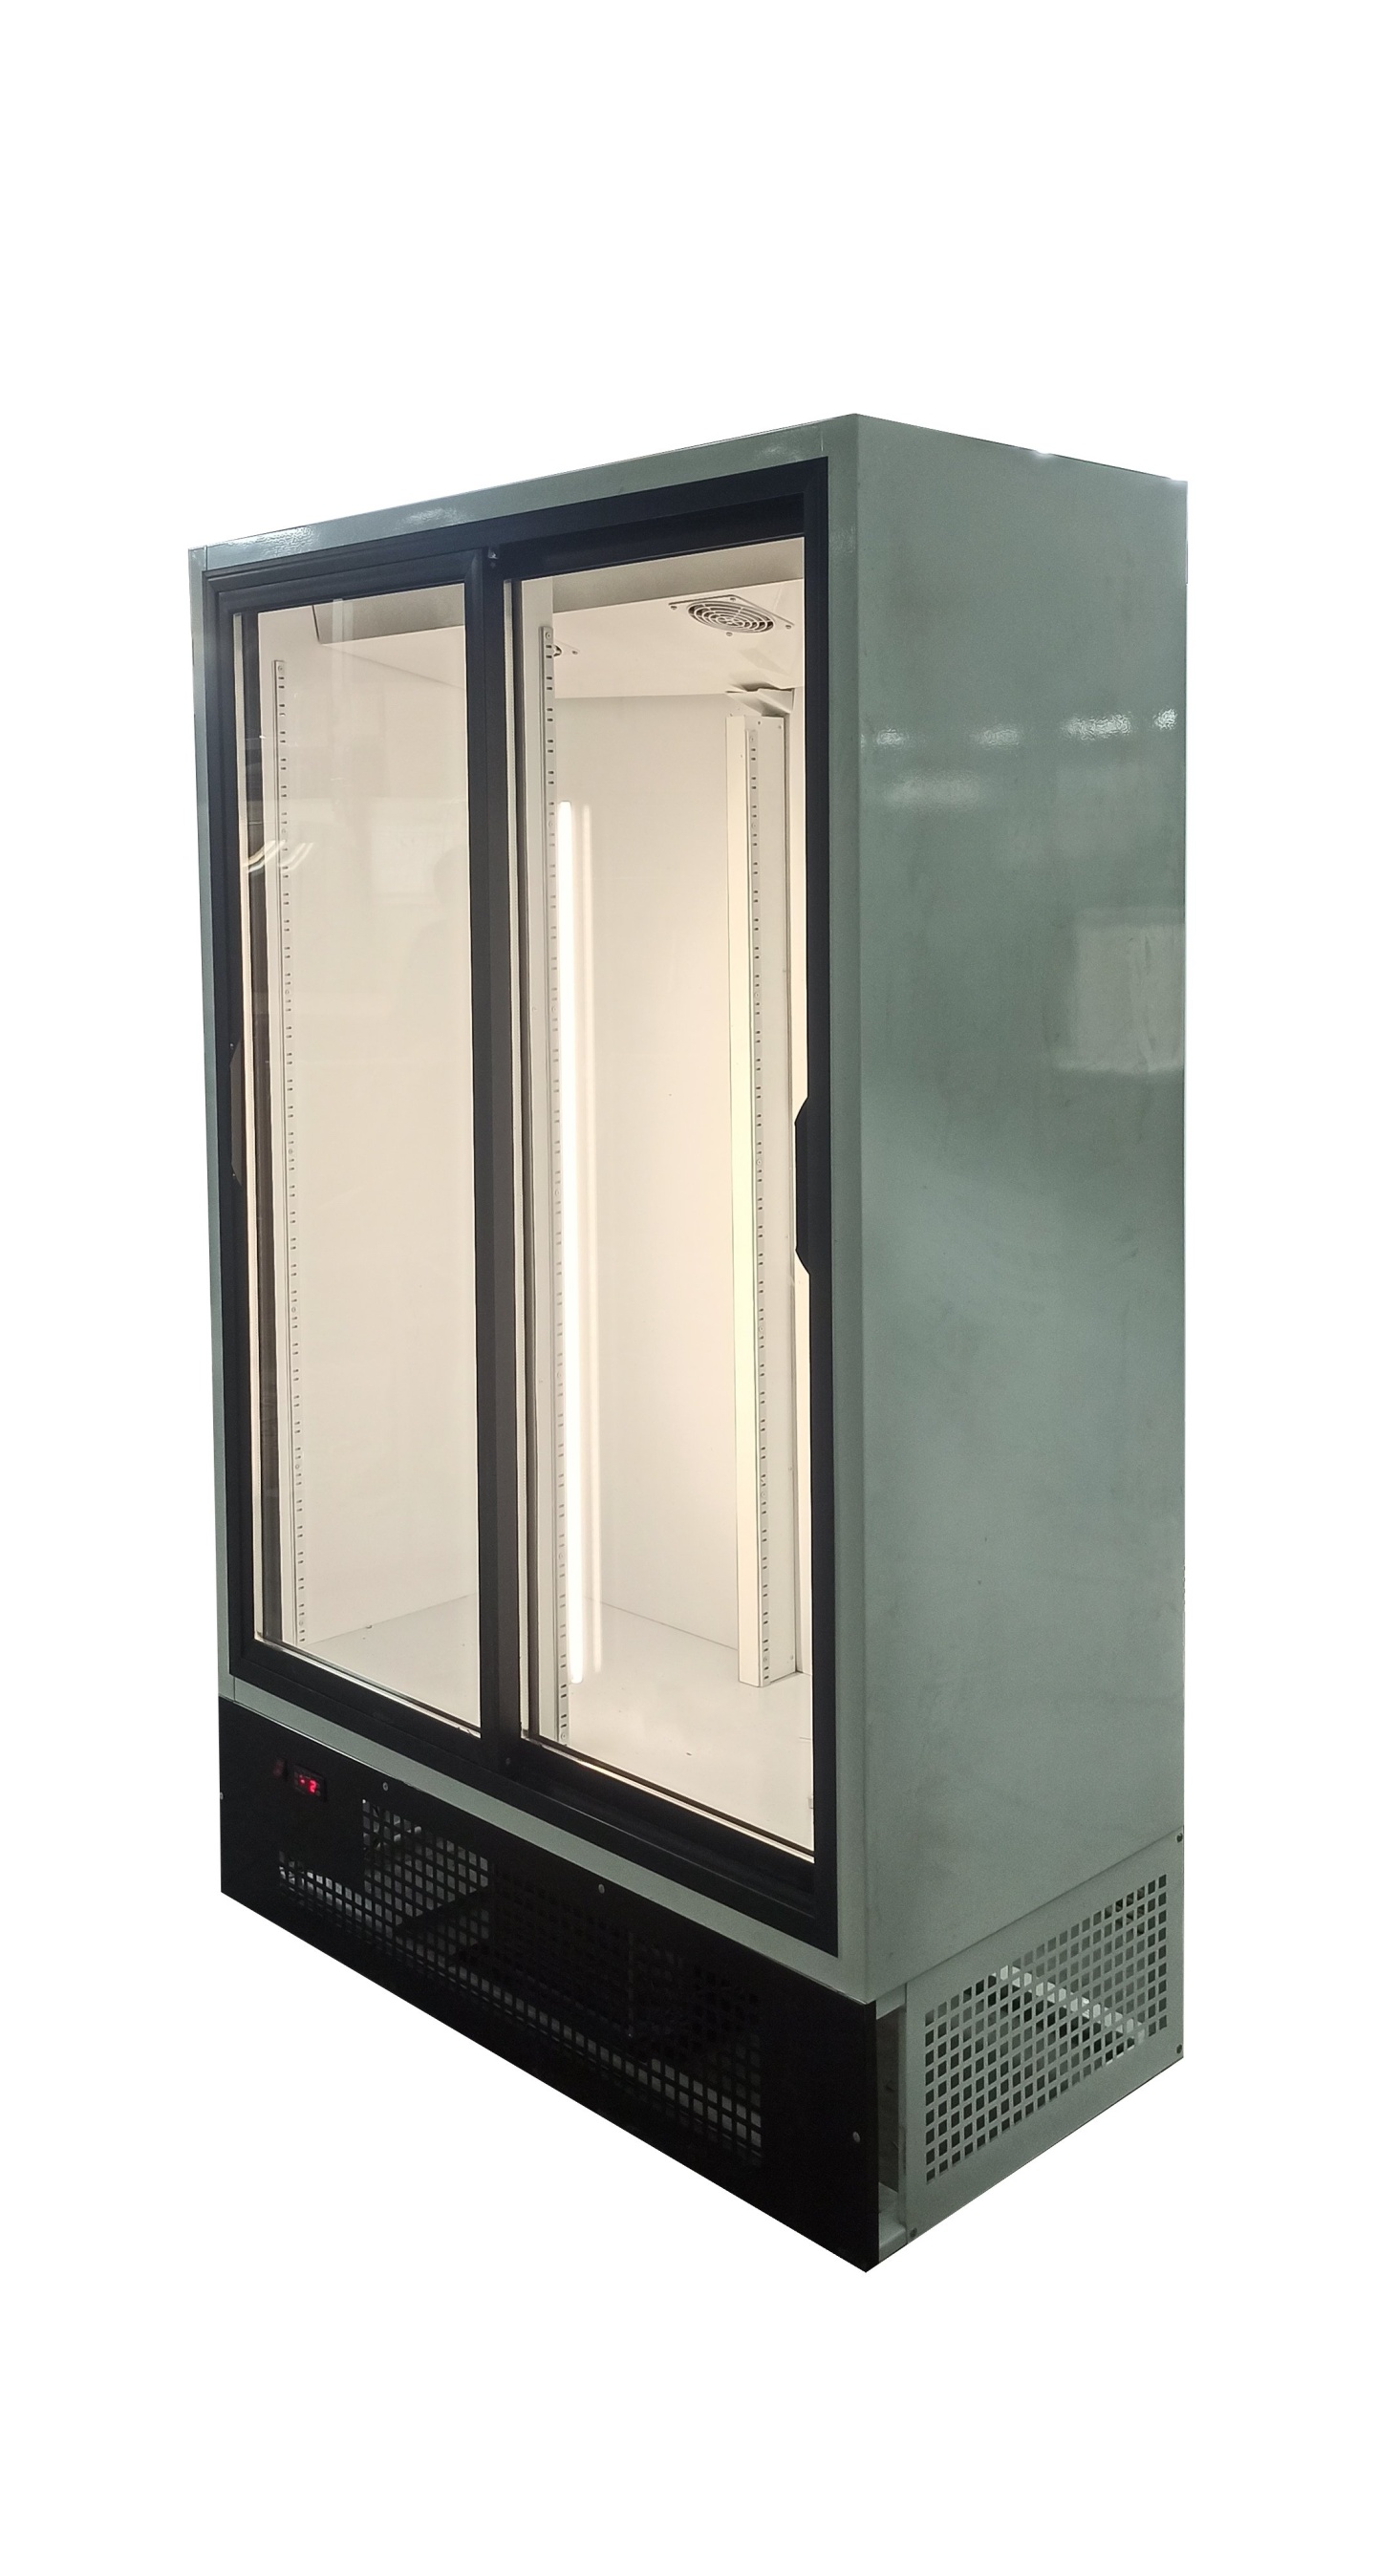 Витрина 24. Шкаф купе Ангара-4. Ту 5151 001 83053360-2016 Ангара холодильник шкаф. Дверь ПВХ распашная 1500*3000 без стекла.